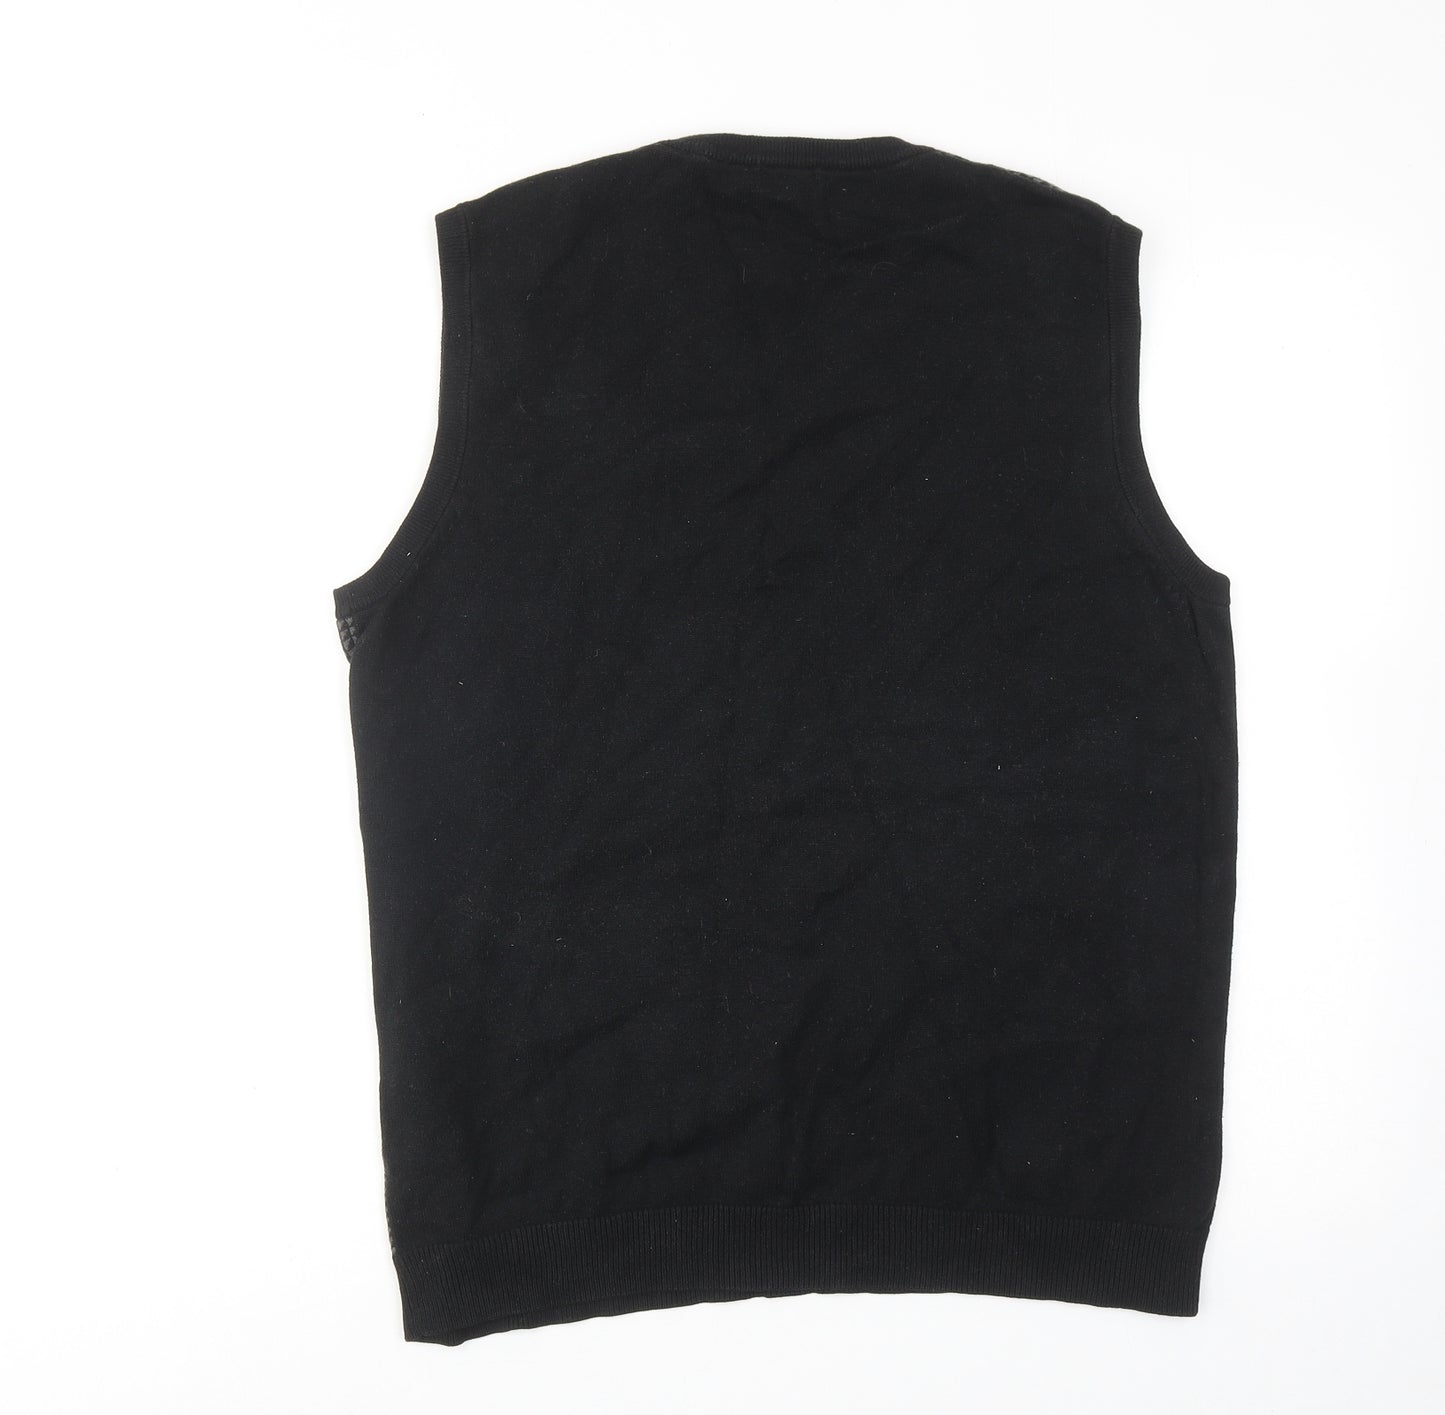 NEXT Mens Black V-Neck Cotton Vest Jumper Size M Sleeveless